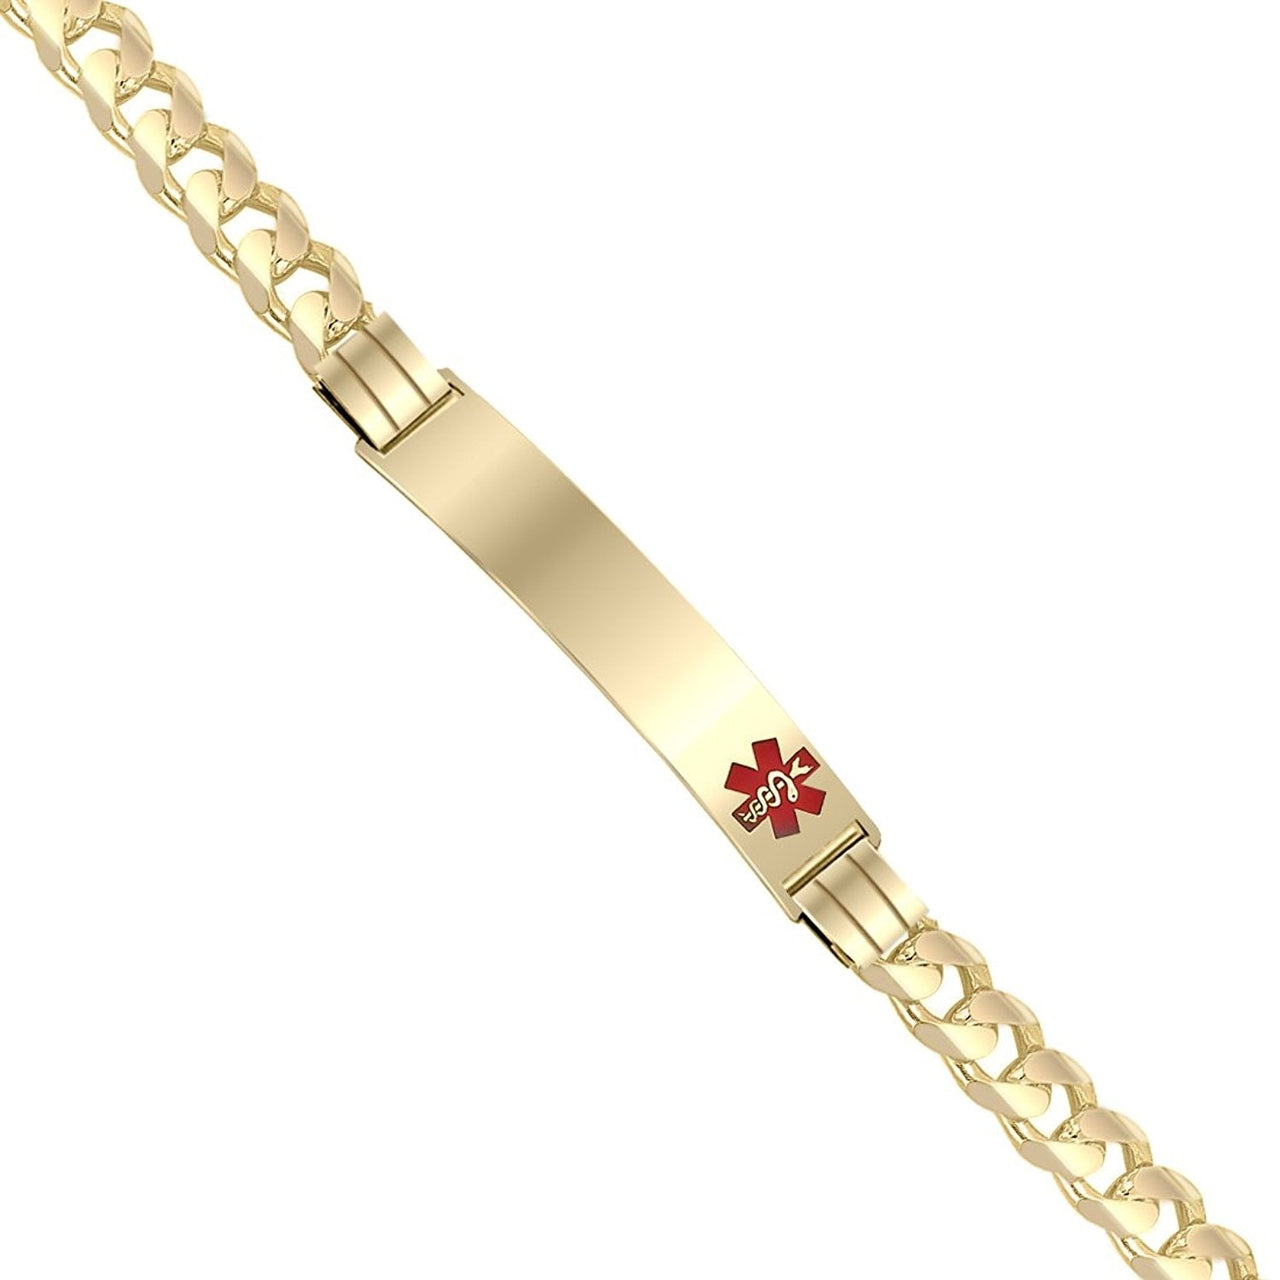 Ladies 14k Yellow Gold 5.5mm Curb Medical Alert ID Bracelet - US Jewels